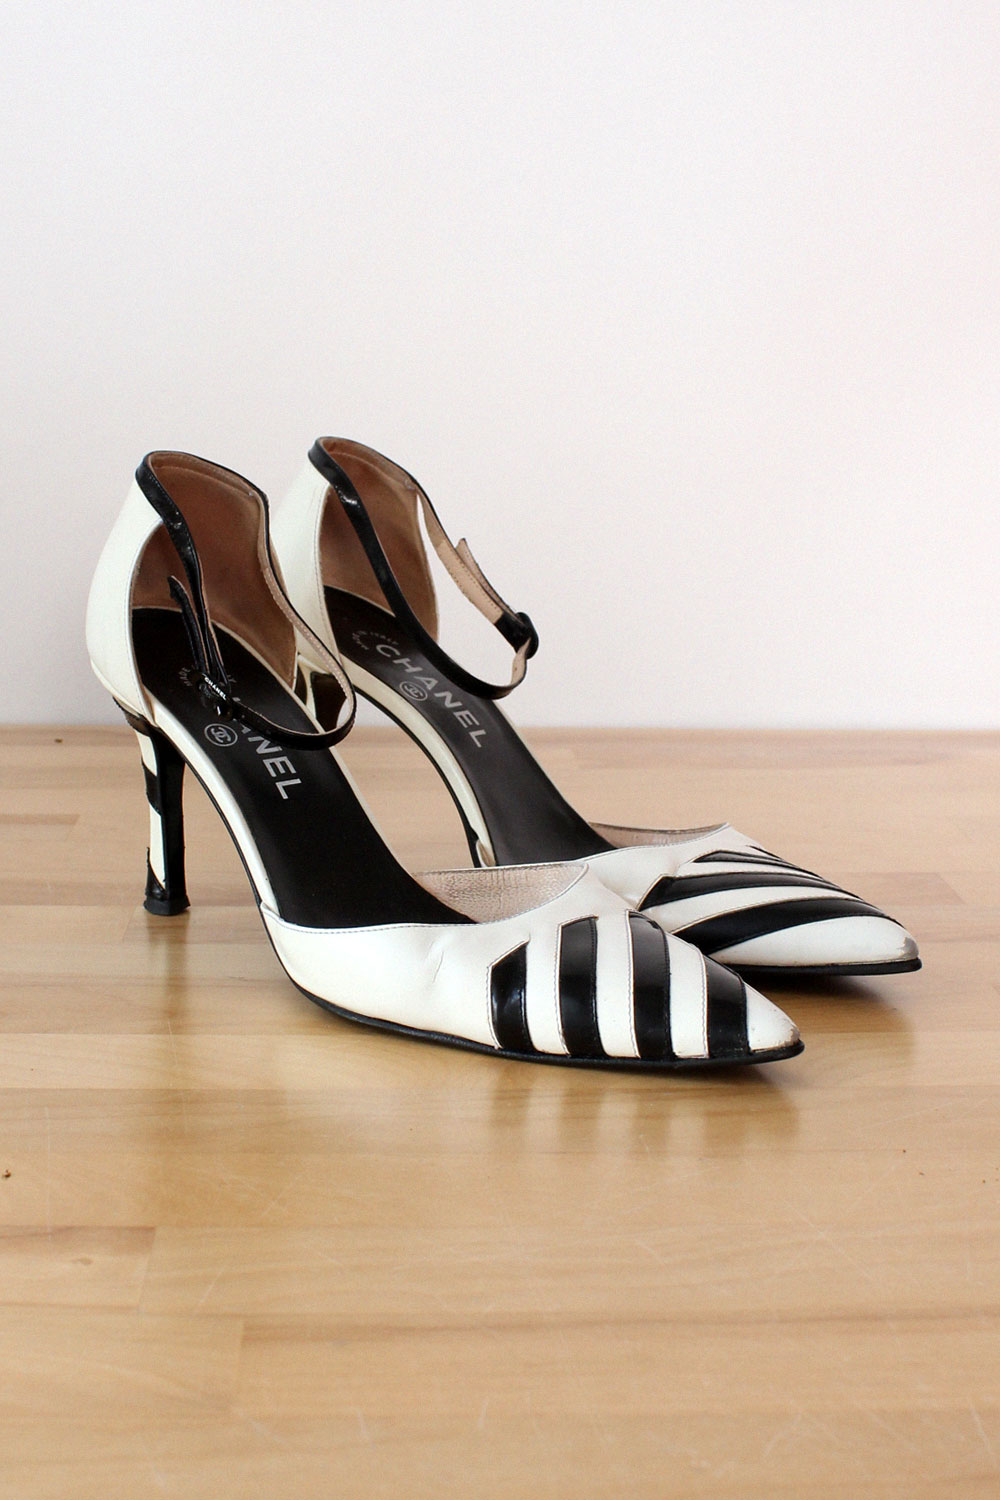 Chanel Stripey Heels 39.5